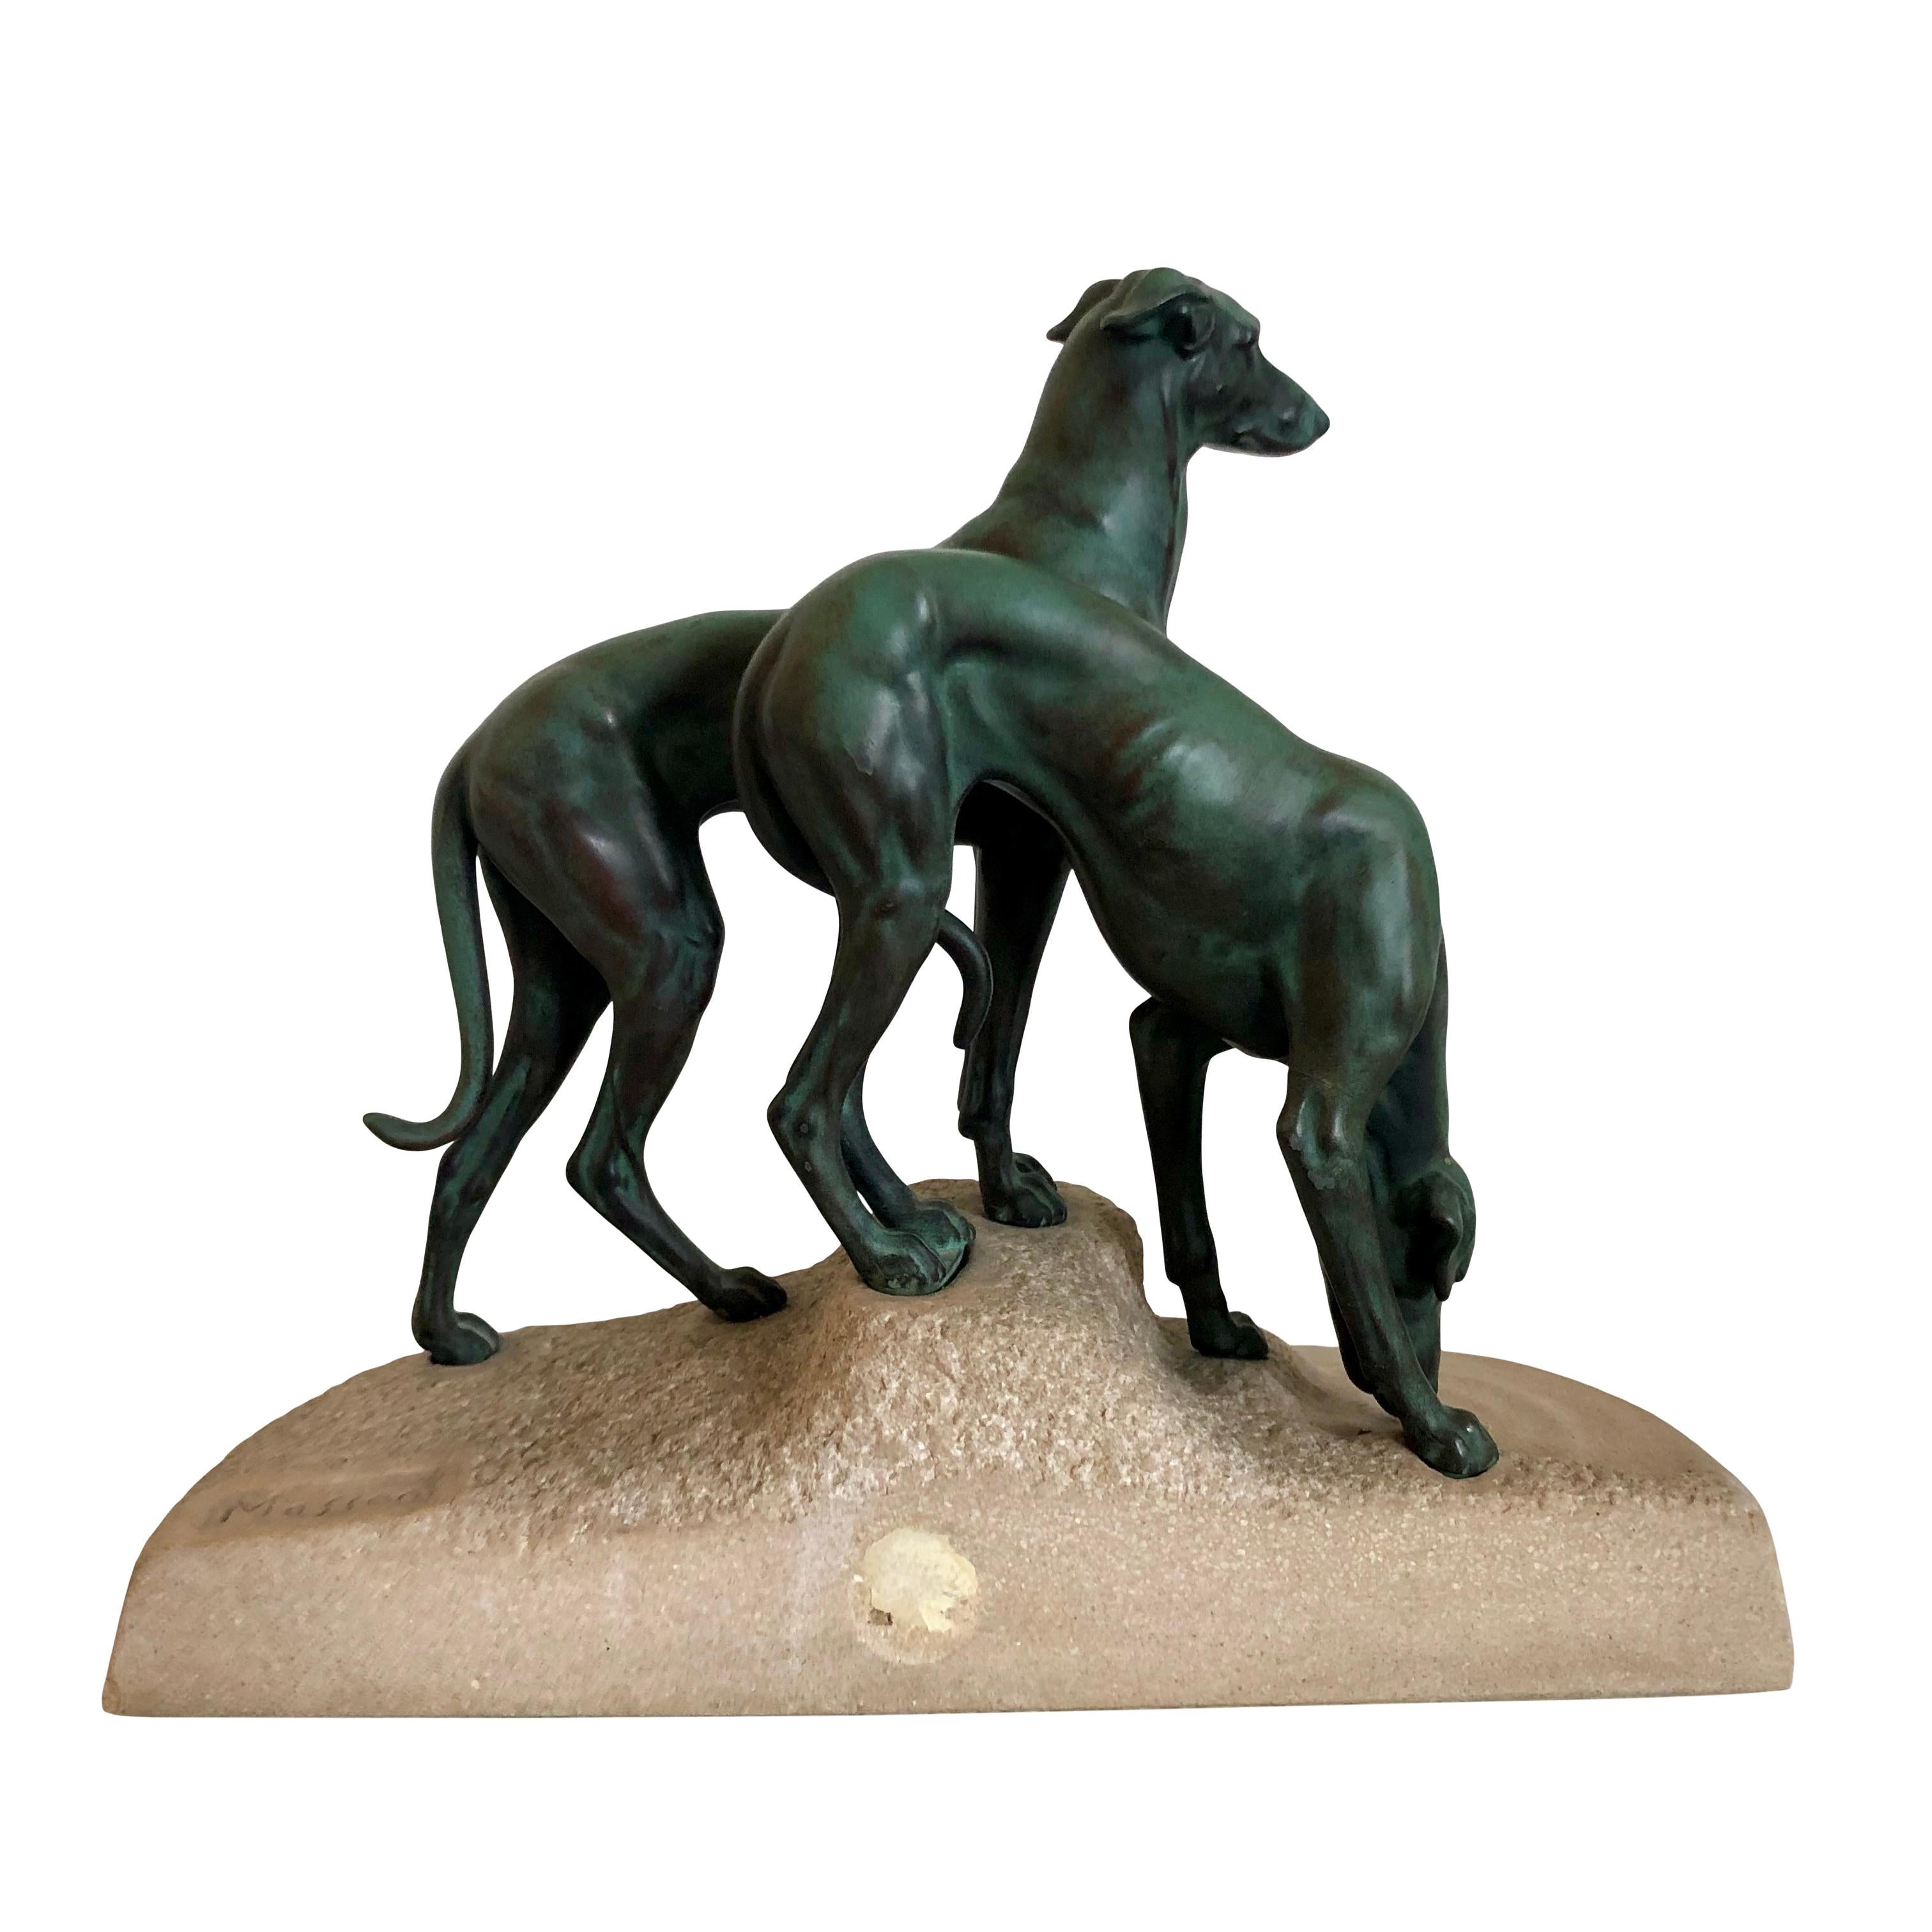 French Art Deco Dog Sculpture Soif Du Desert by Jules Edmond Masson for Max Le Verrier